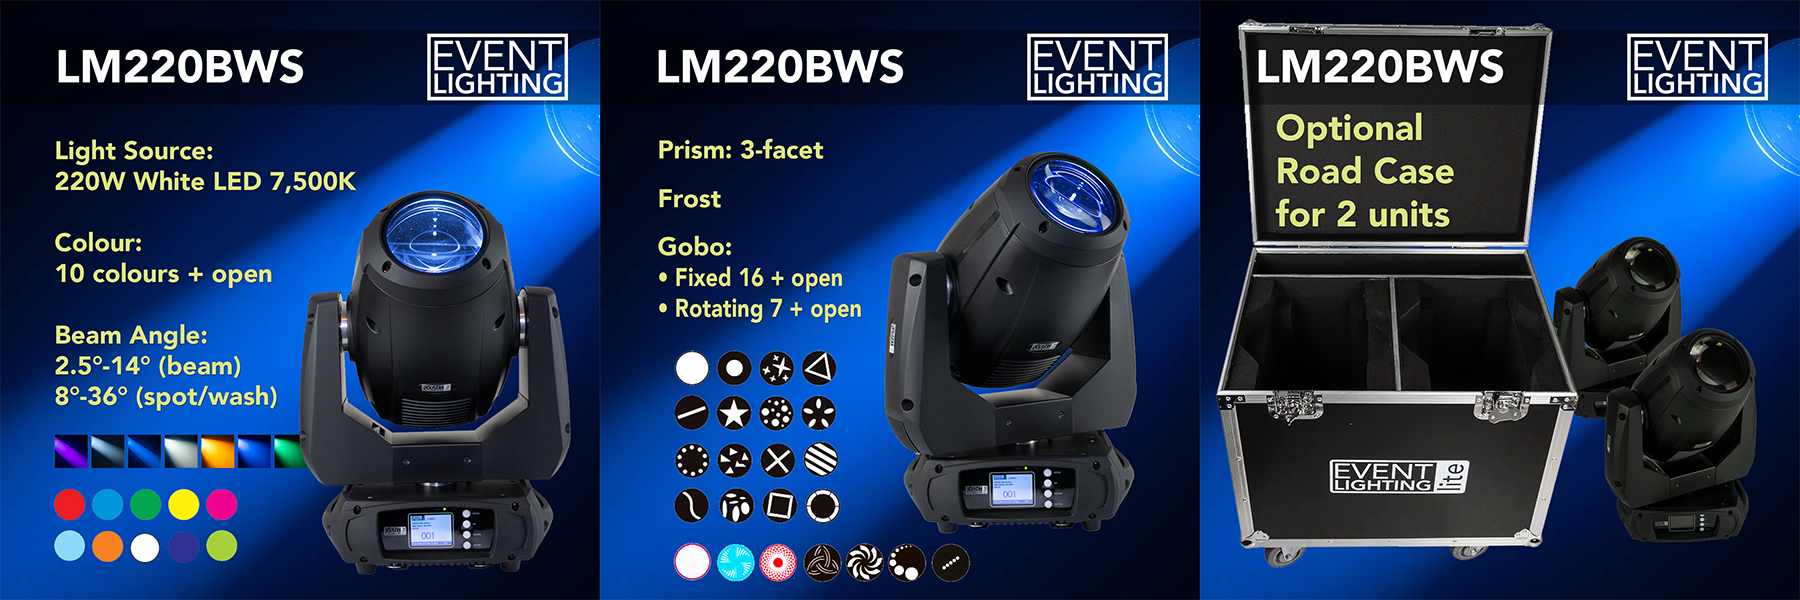 Product Spotlight - Event Lighting LM220BWS